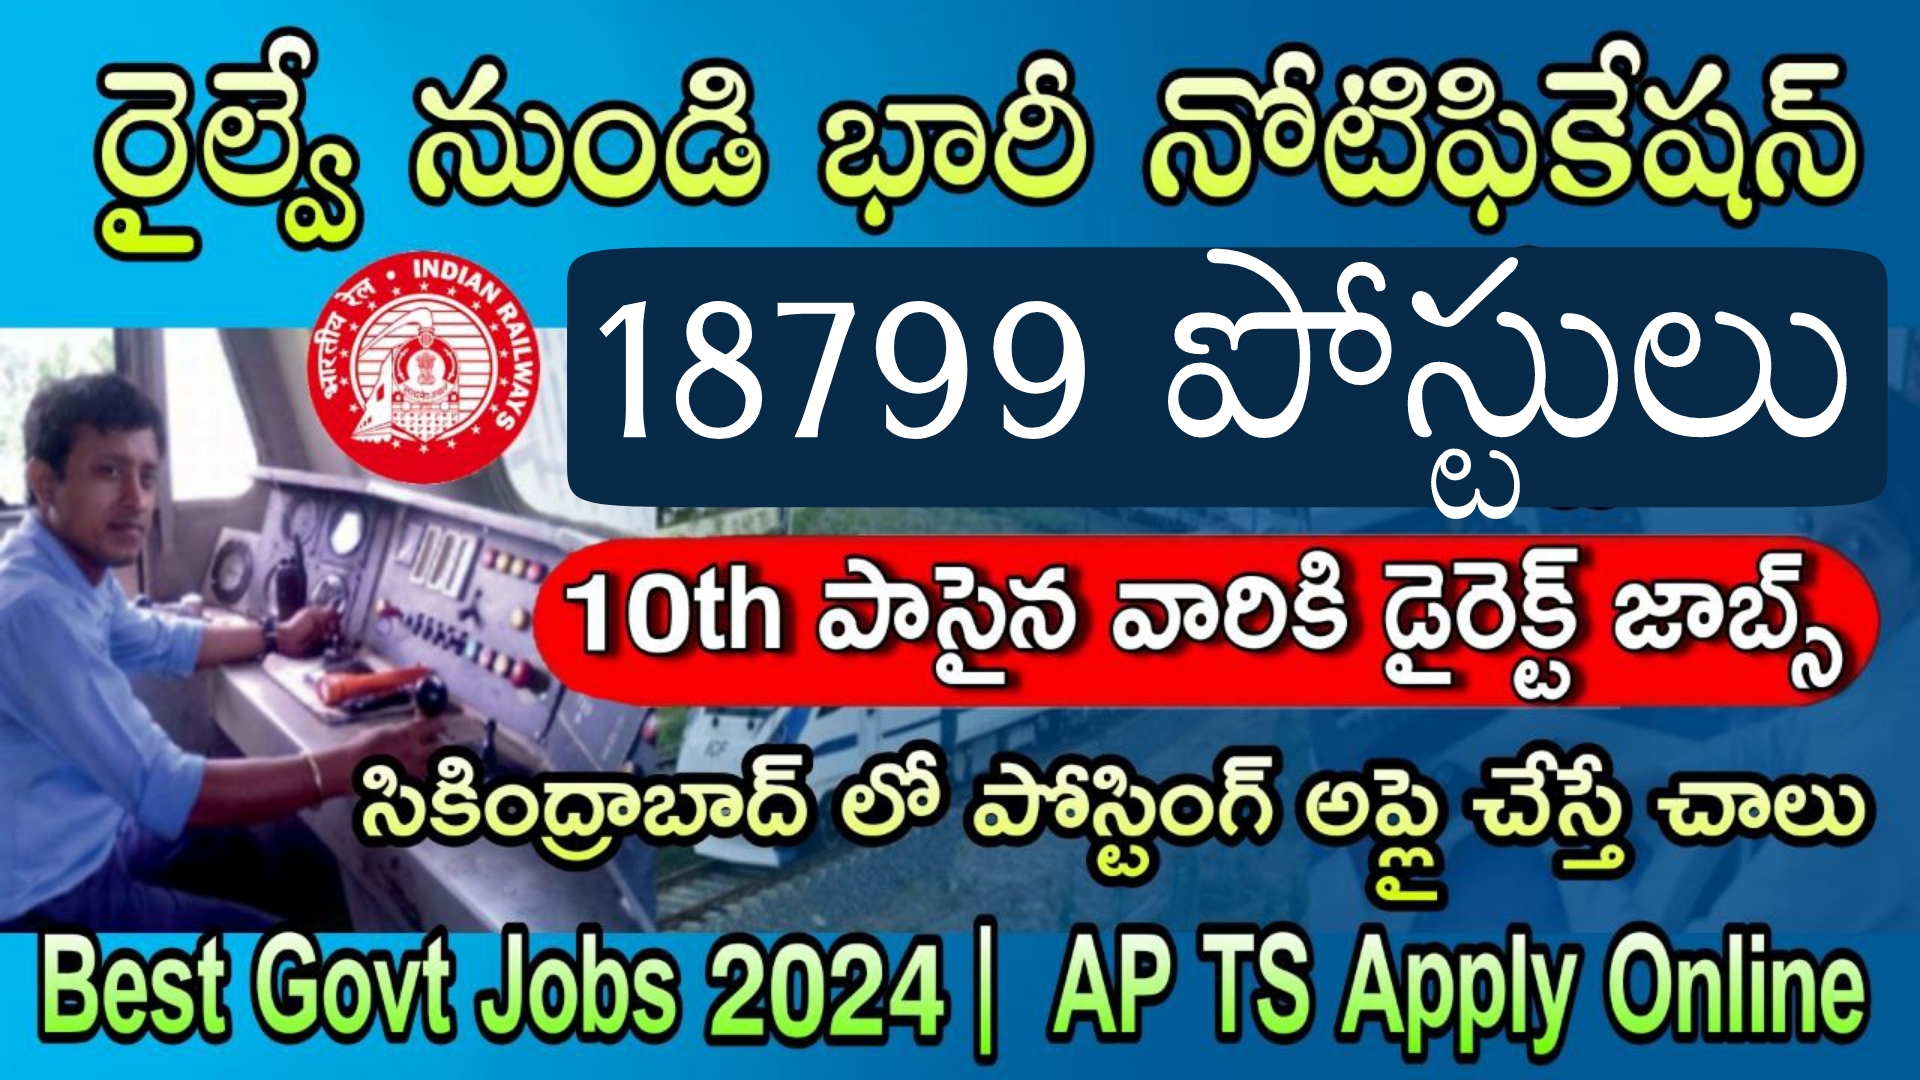 Railway RRB Assistant Loco Pilot (ALP) 2024 18799 Vacancy Increased Notice in Telugu 